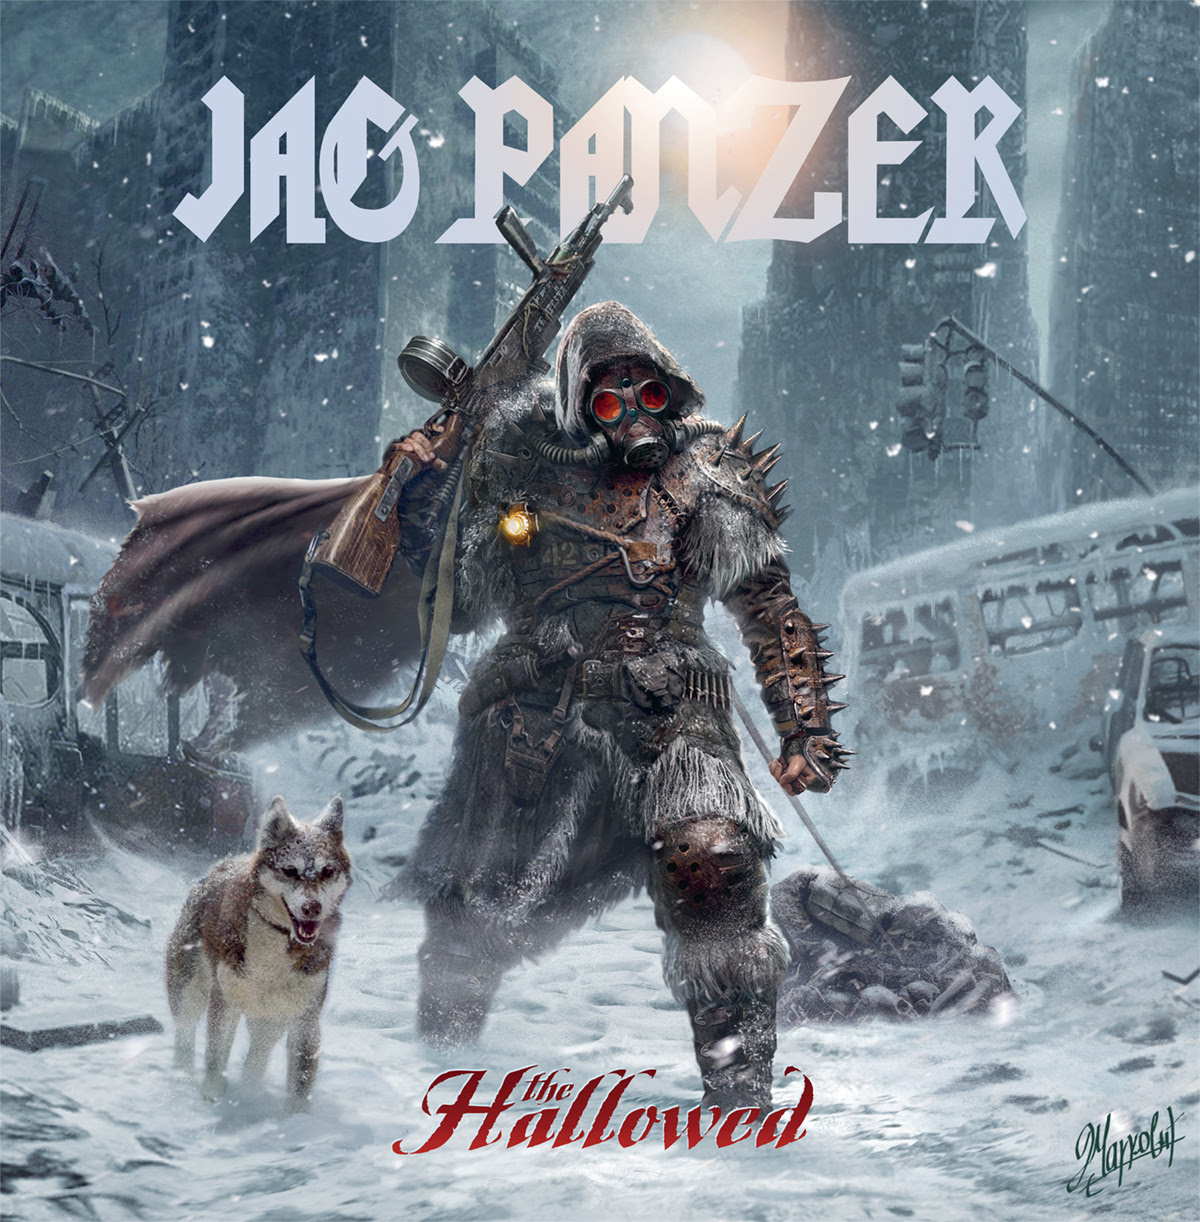 Jag Panzer ‘The Hallowed’ album artwork